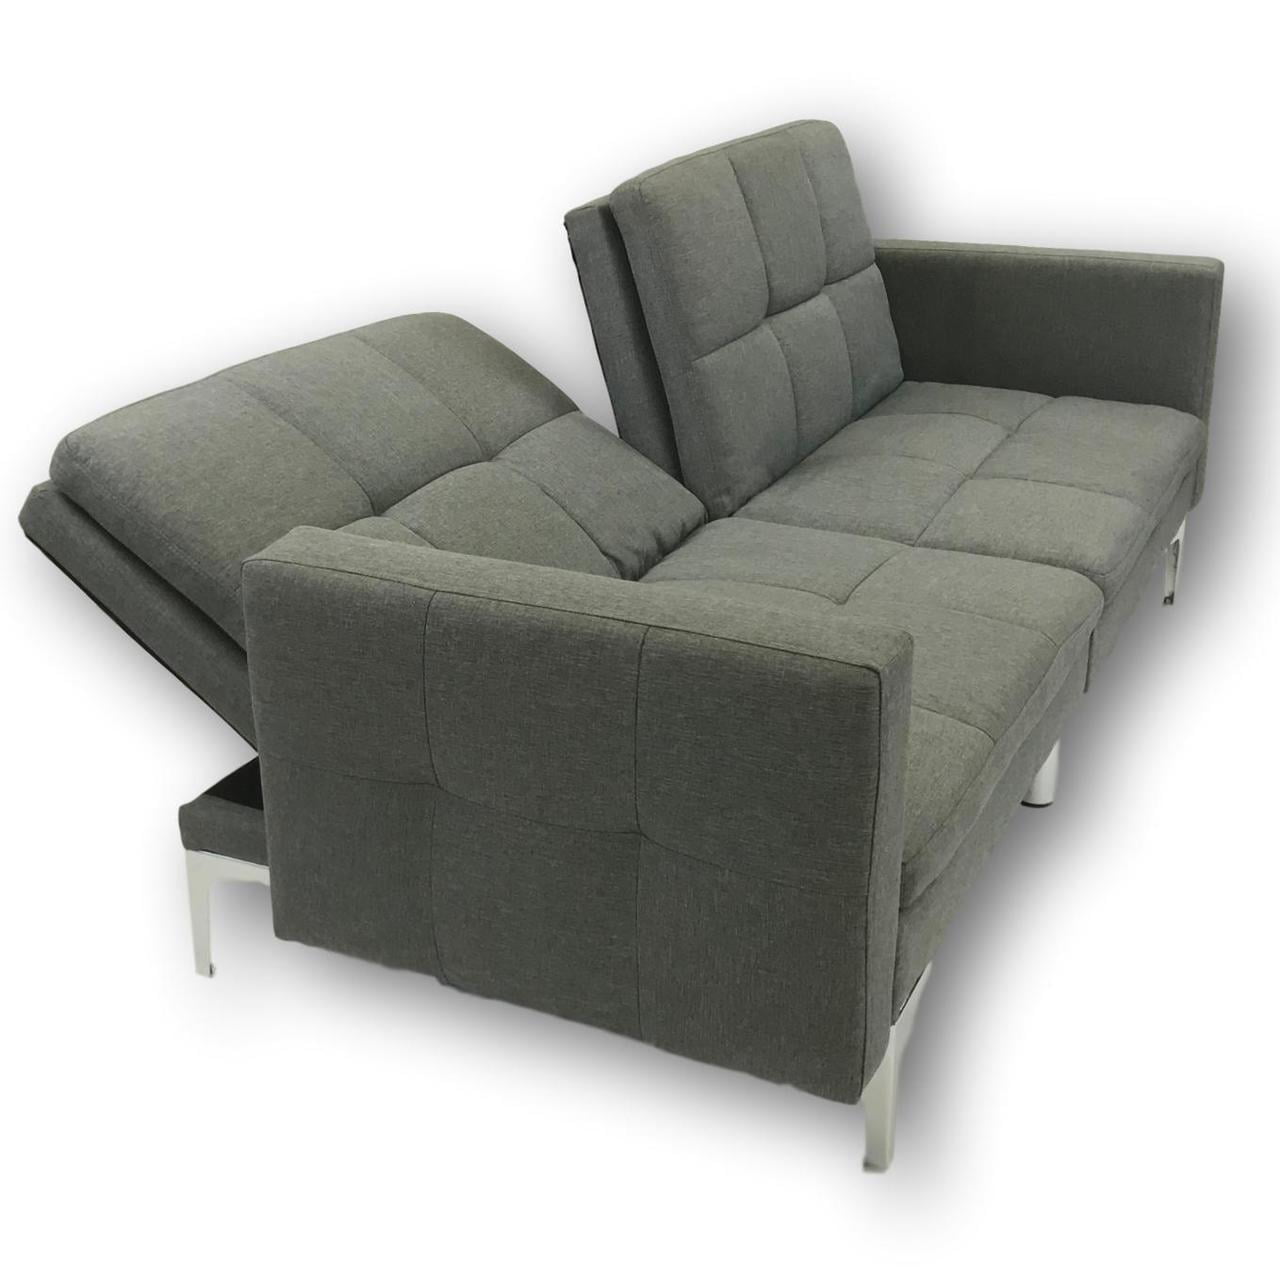 ViscoLogic Clarke Split Back Convertible Futon Sofa Bed